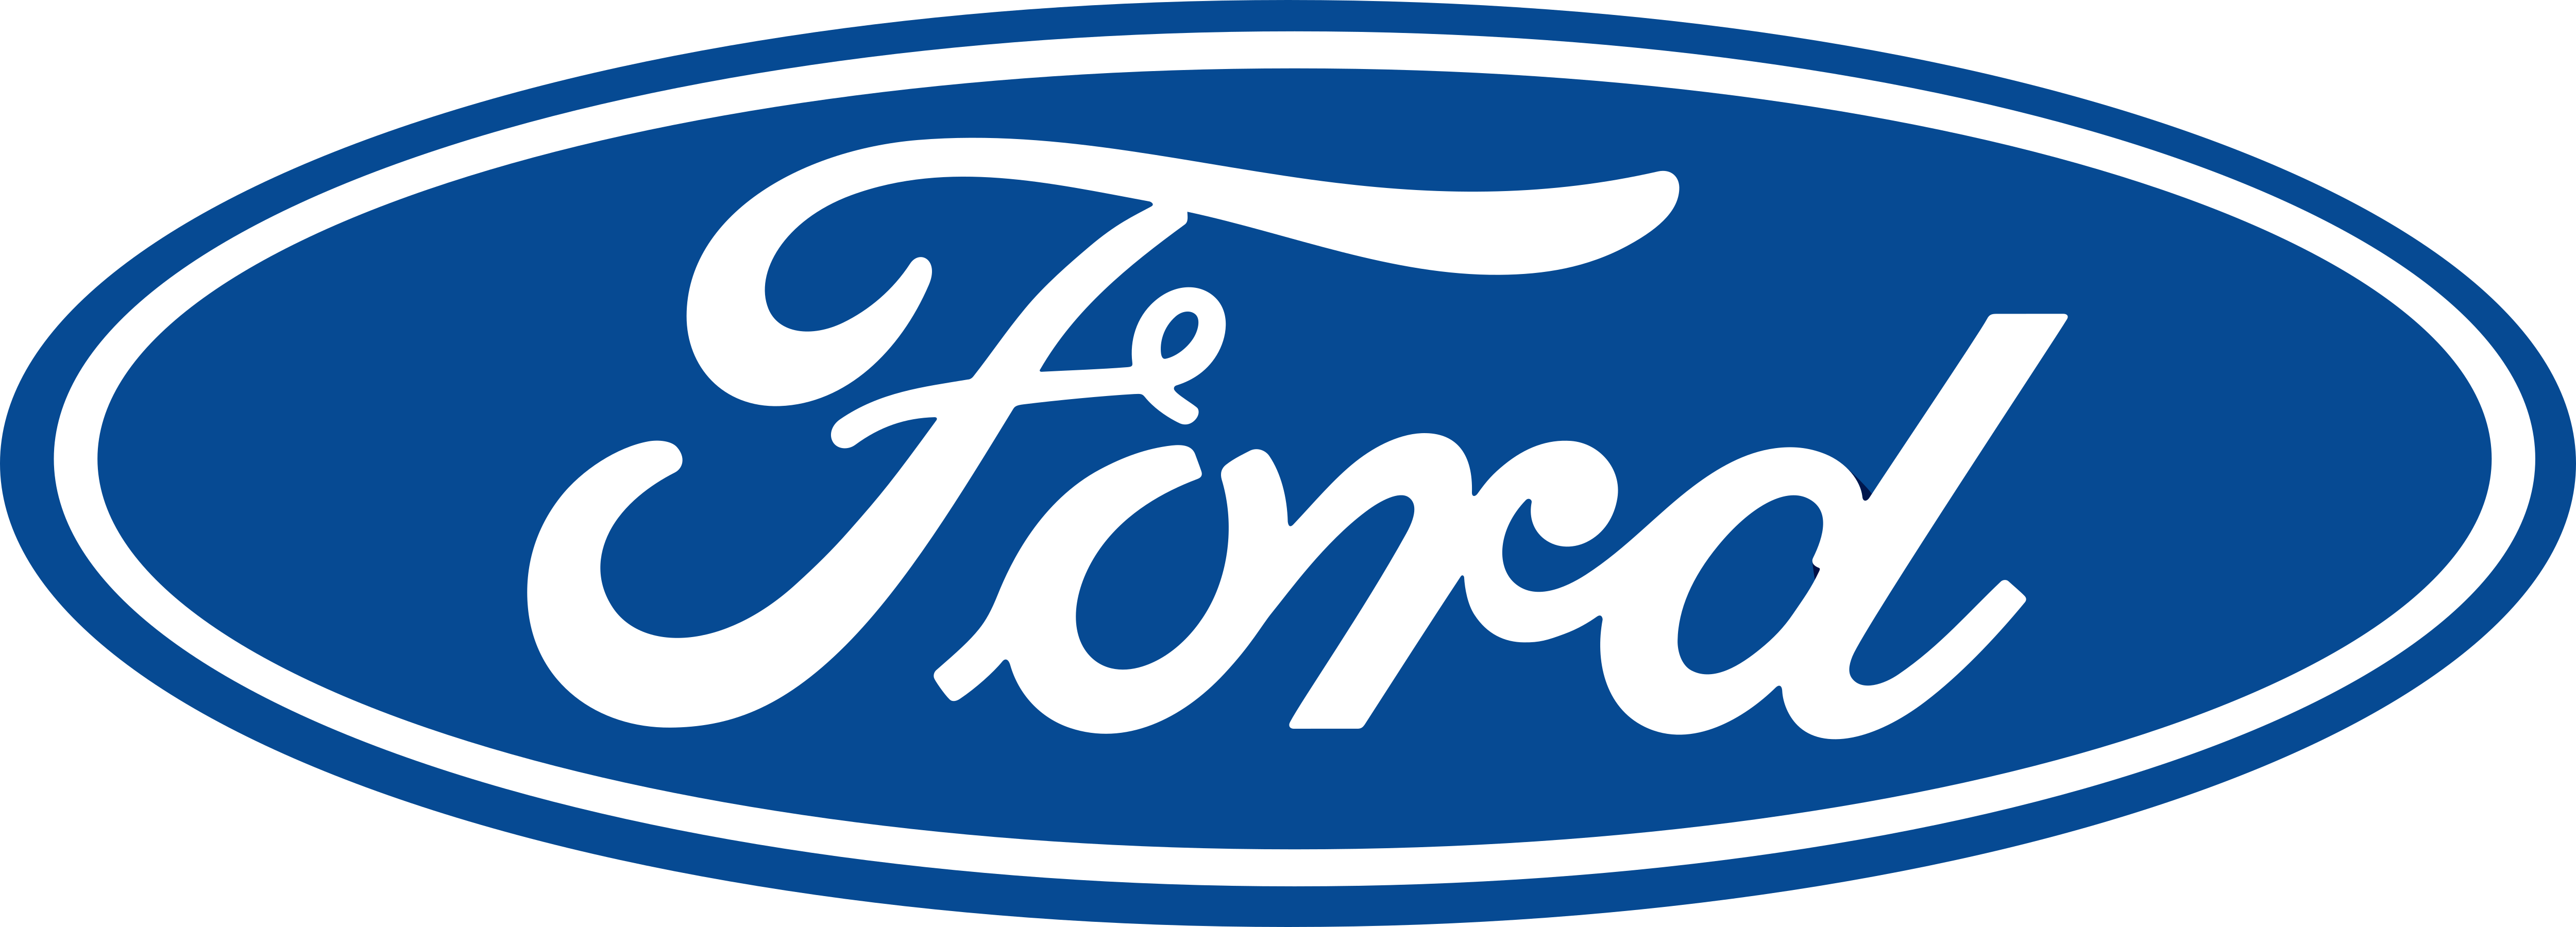 Ford logotyp